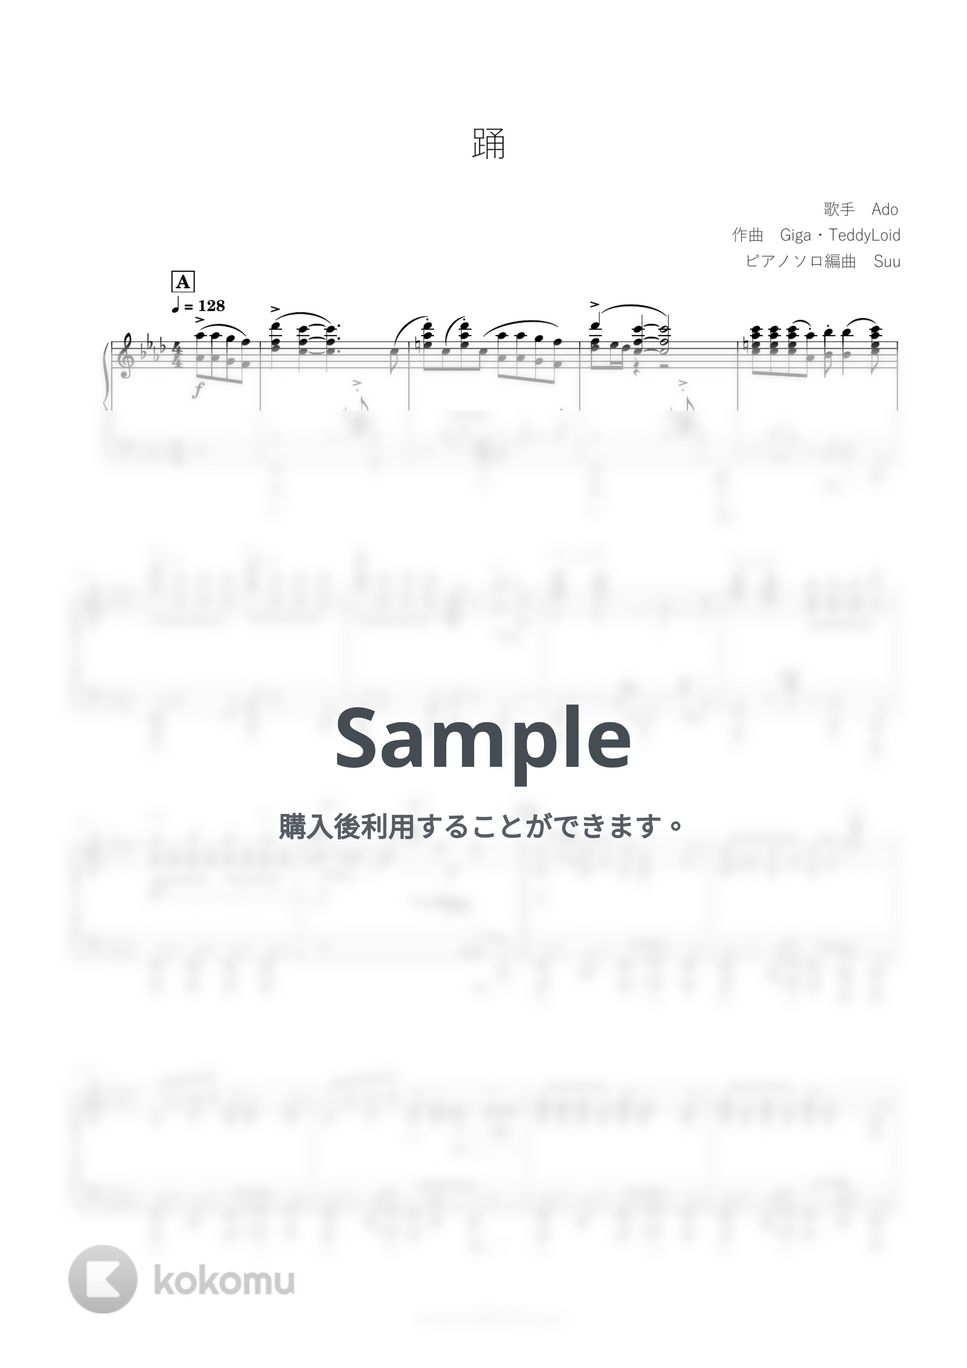 Ado - 踊 (ピアノソロ上級  / 「NHK MUSIC presents 夜光音楽 ボカロP 5min.」テーマソング （NHKテレビ）) by Suu